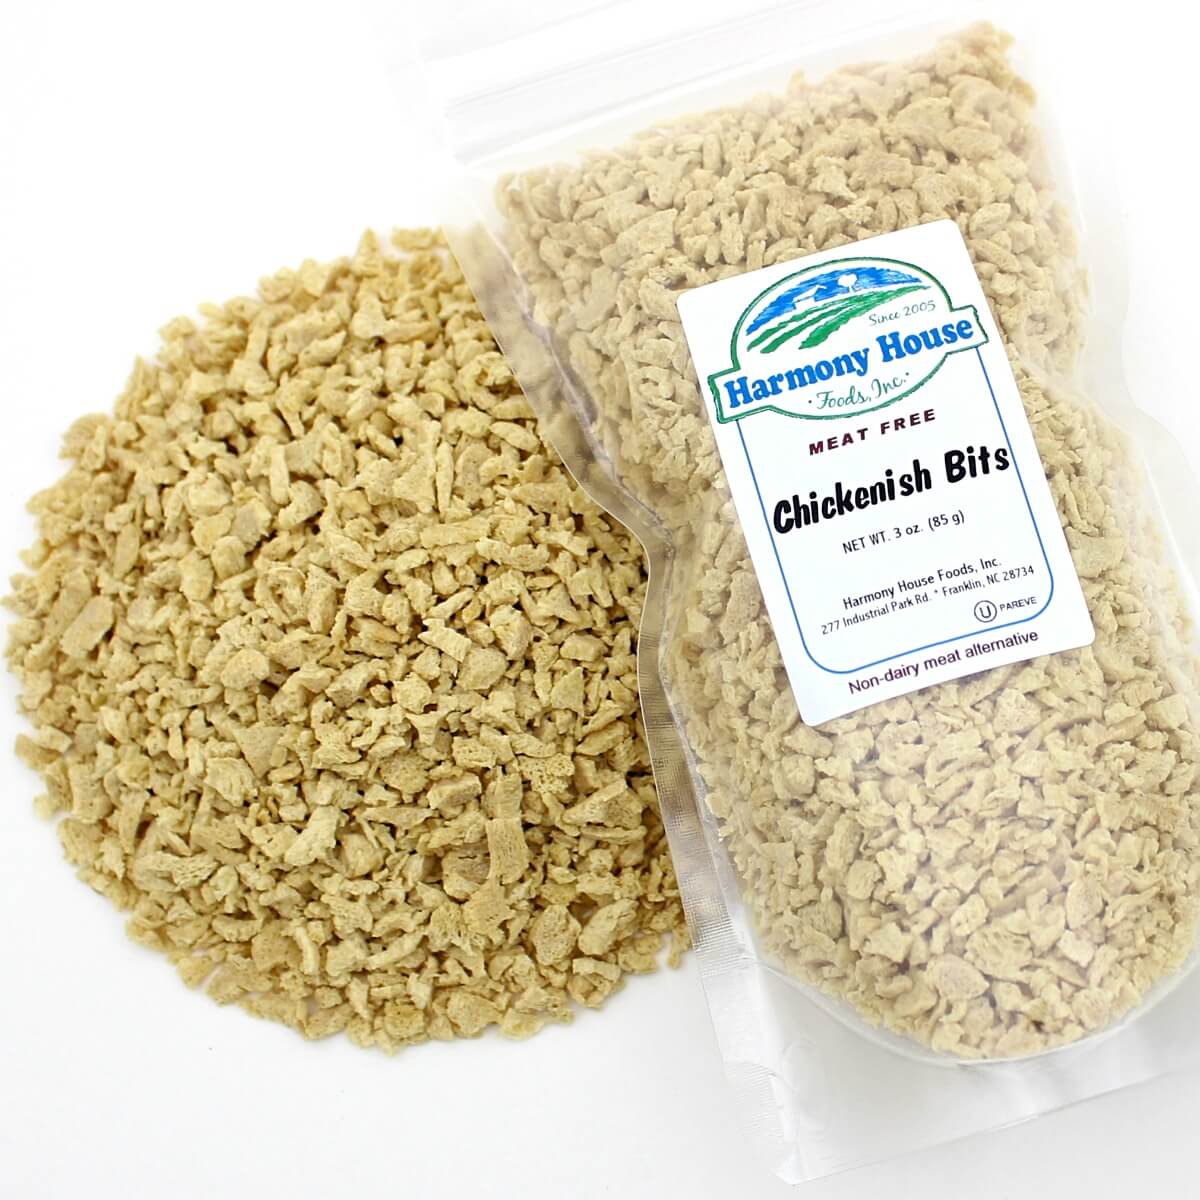 Keywords: bag, granola

Modified Description: A bag of calamansi granola next to a bag of granola.